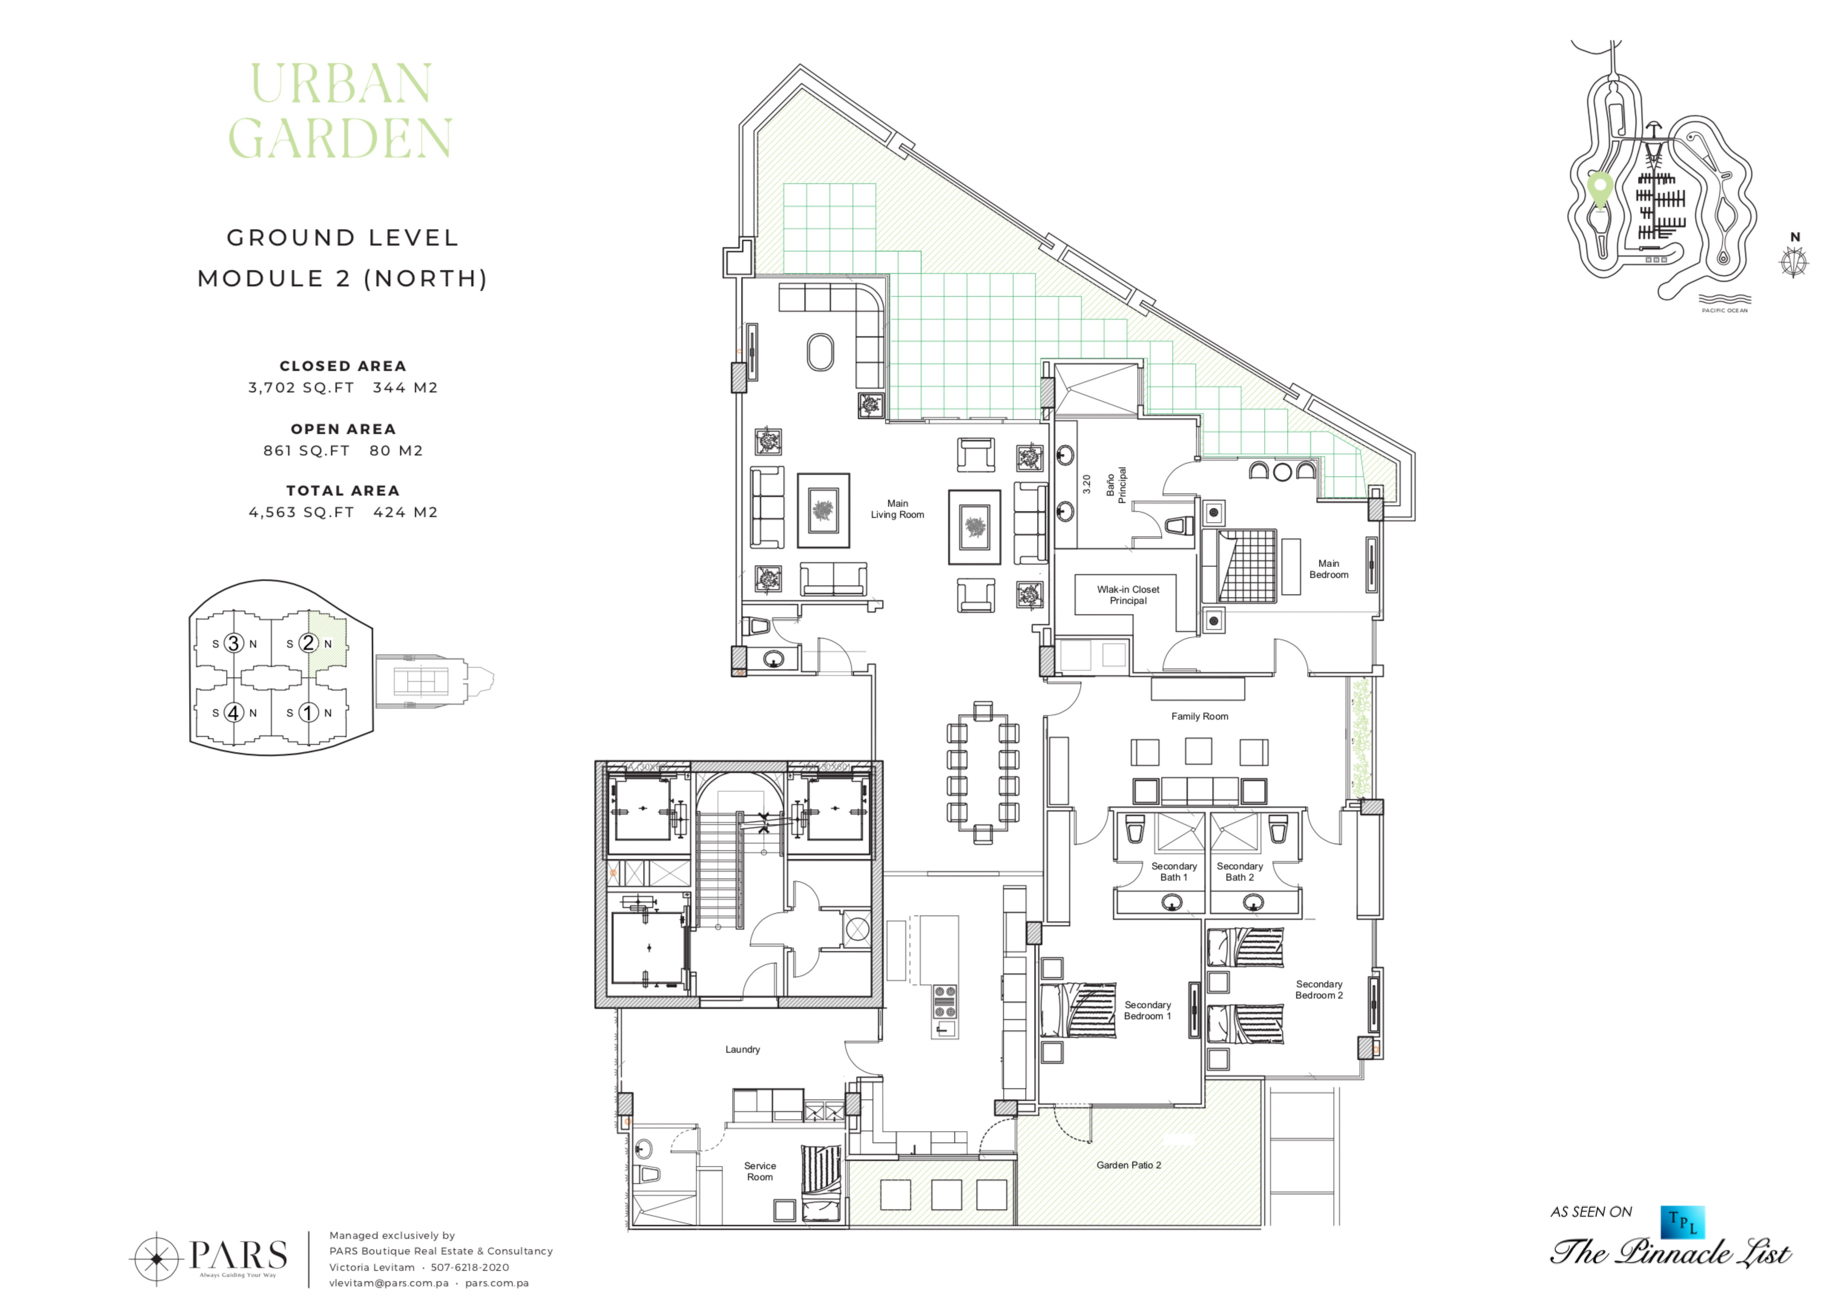 Urban Garden Apartment - Ocean Reef Island, Panama - Ground Level Module 2 Floor Plan